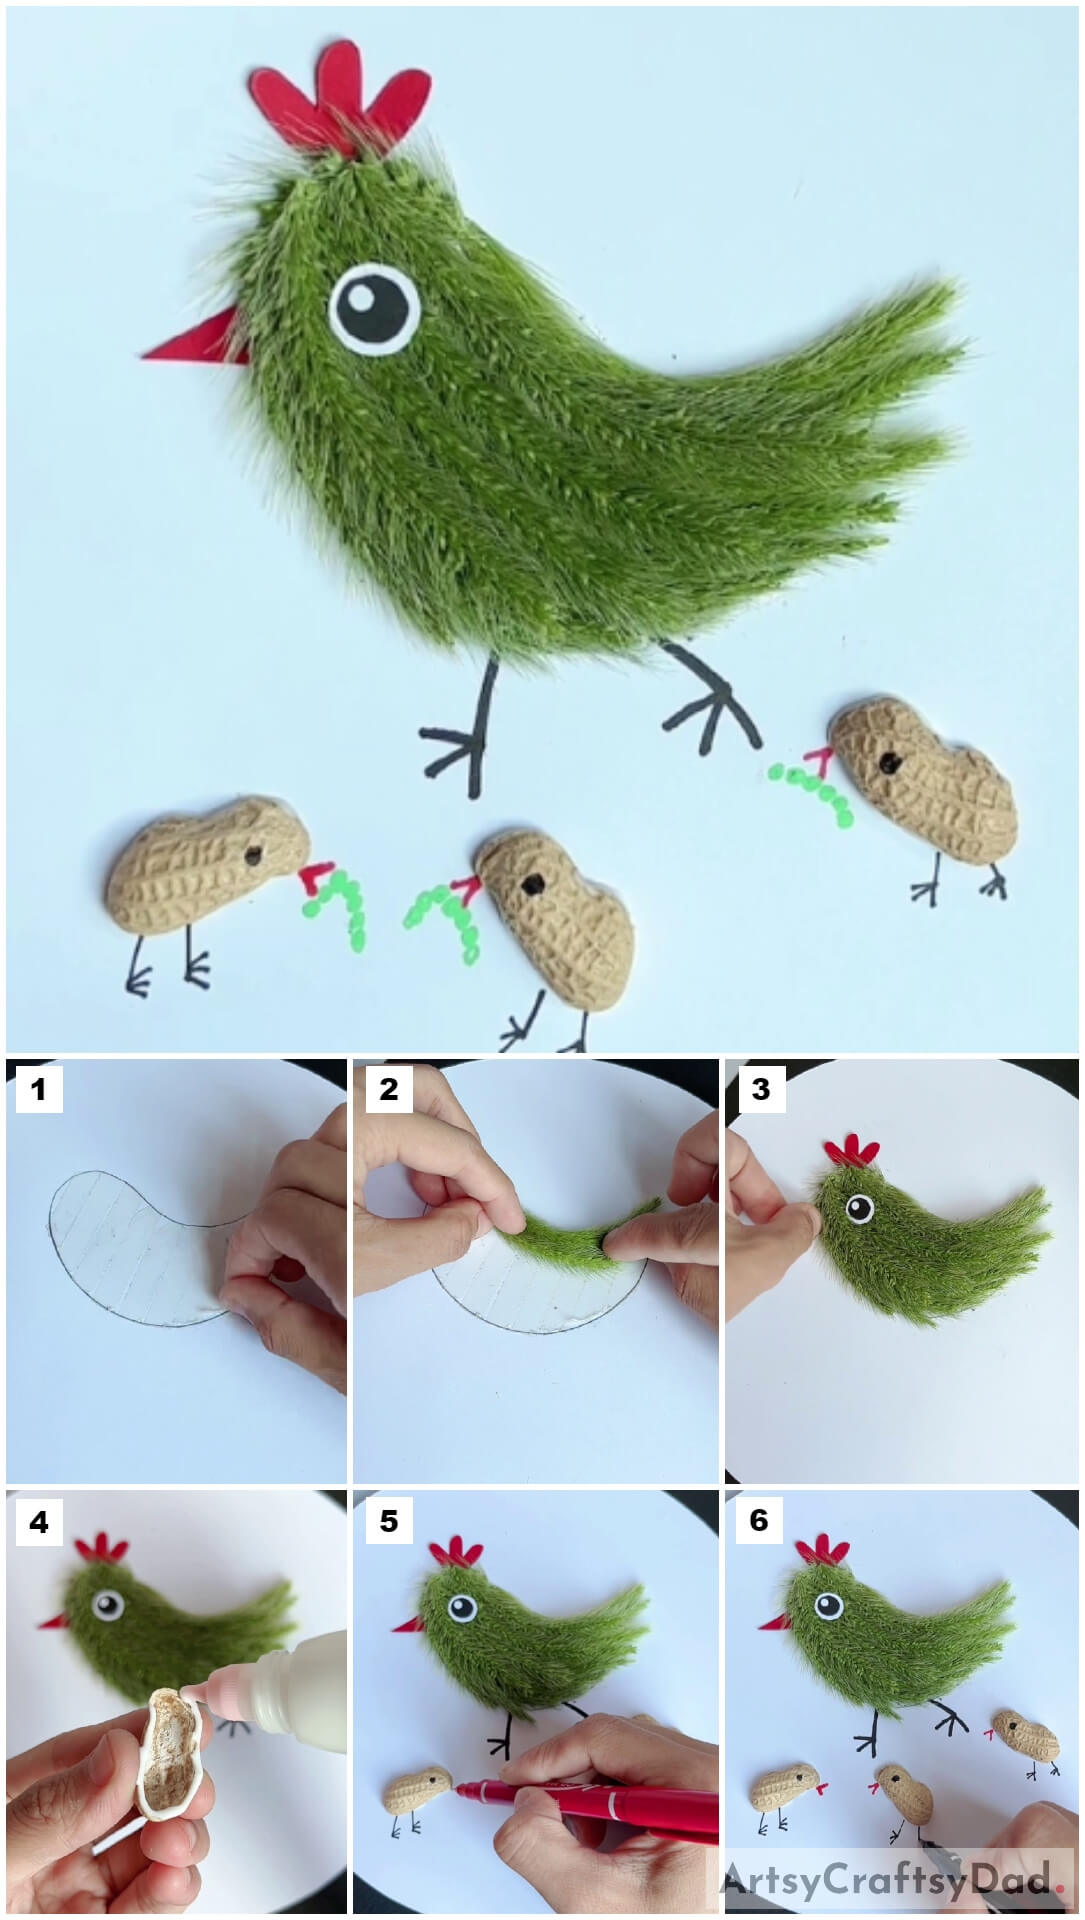 Hen With Chicks: Artificial Grass & Peanut Shell Craft Tutorial